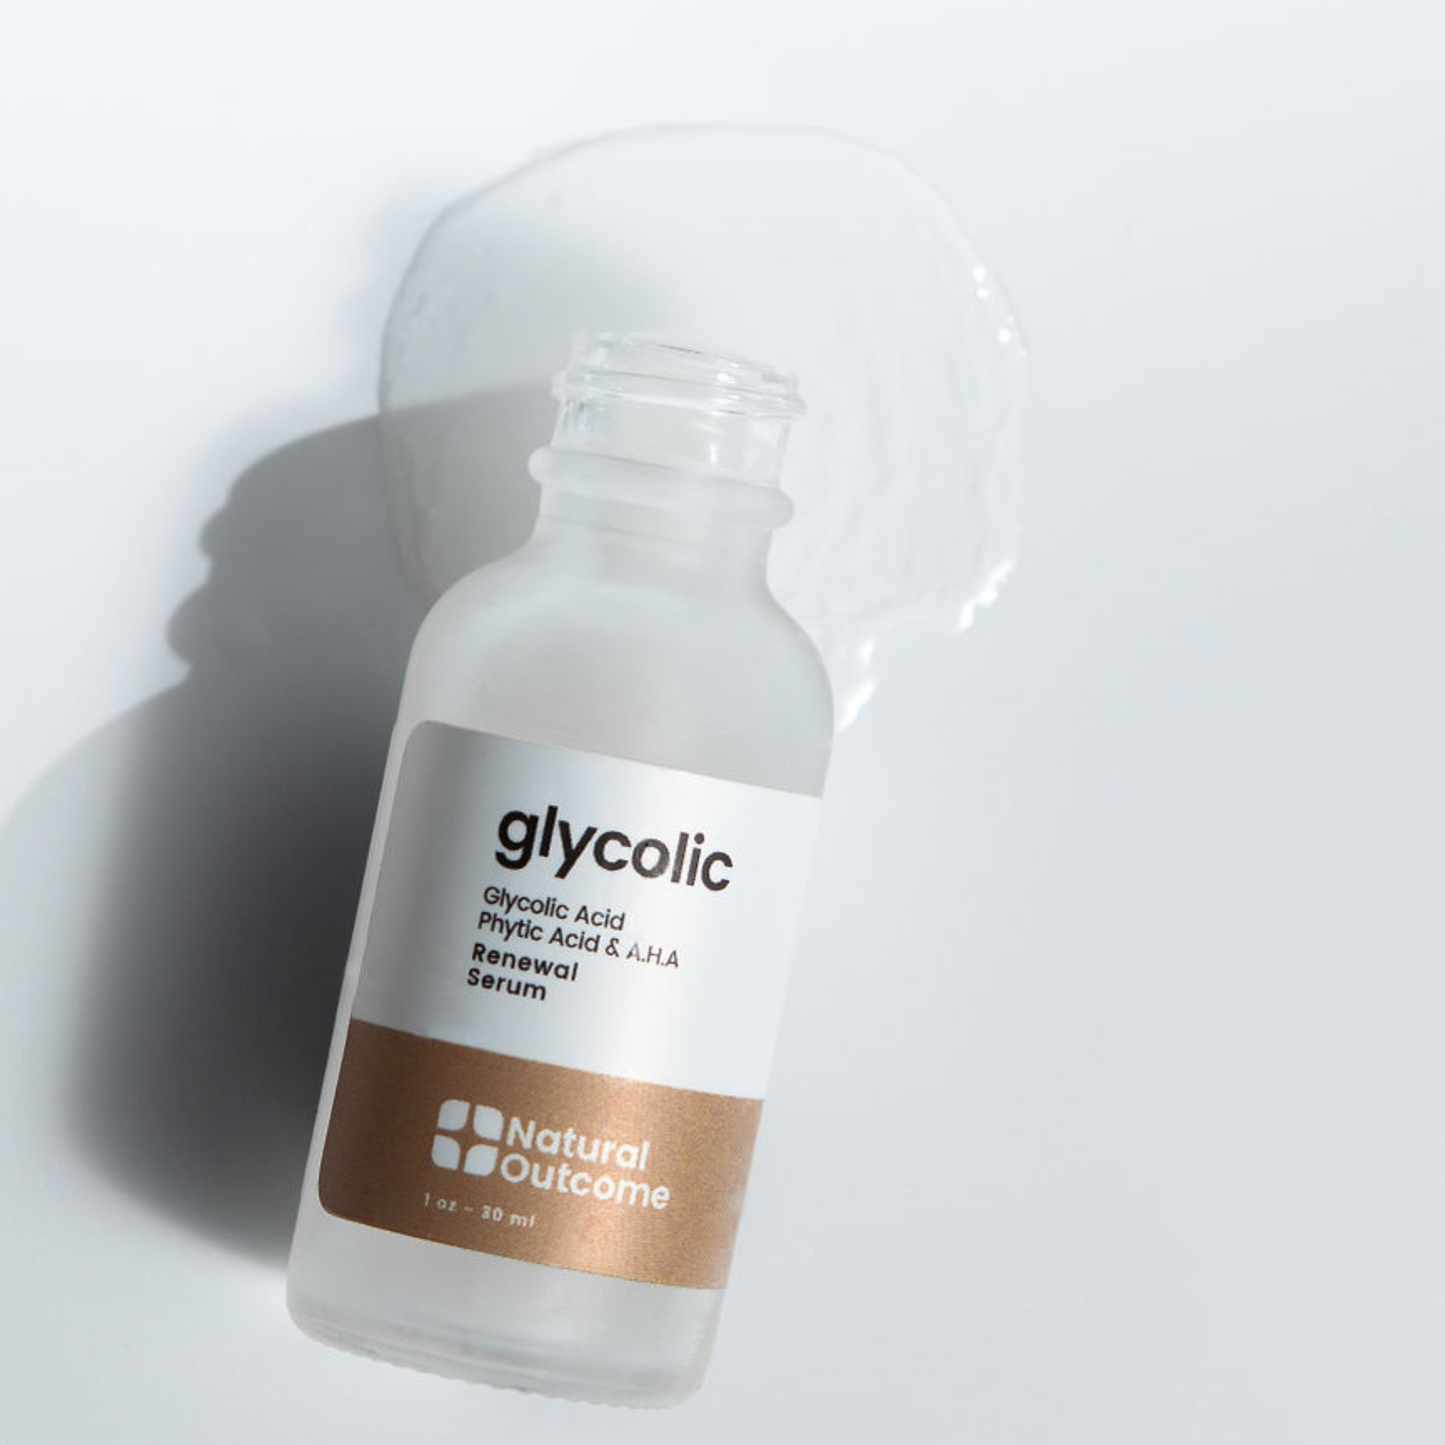 Glycolic Acid Renewal Serum